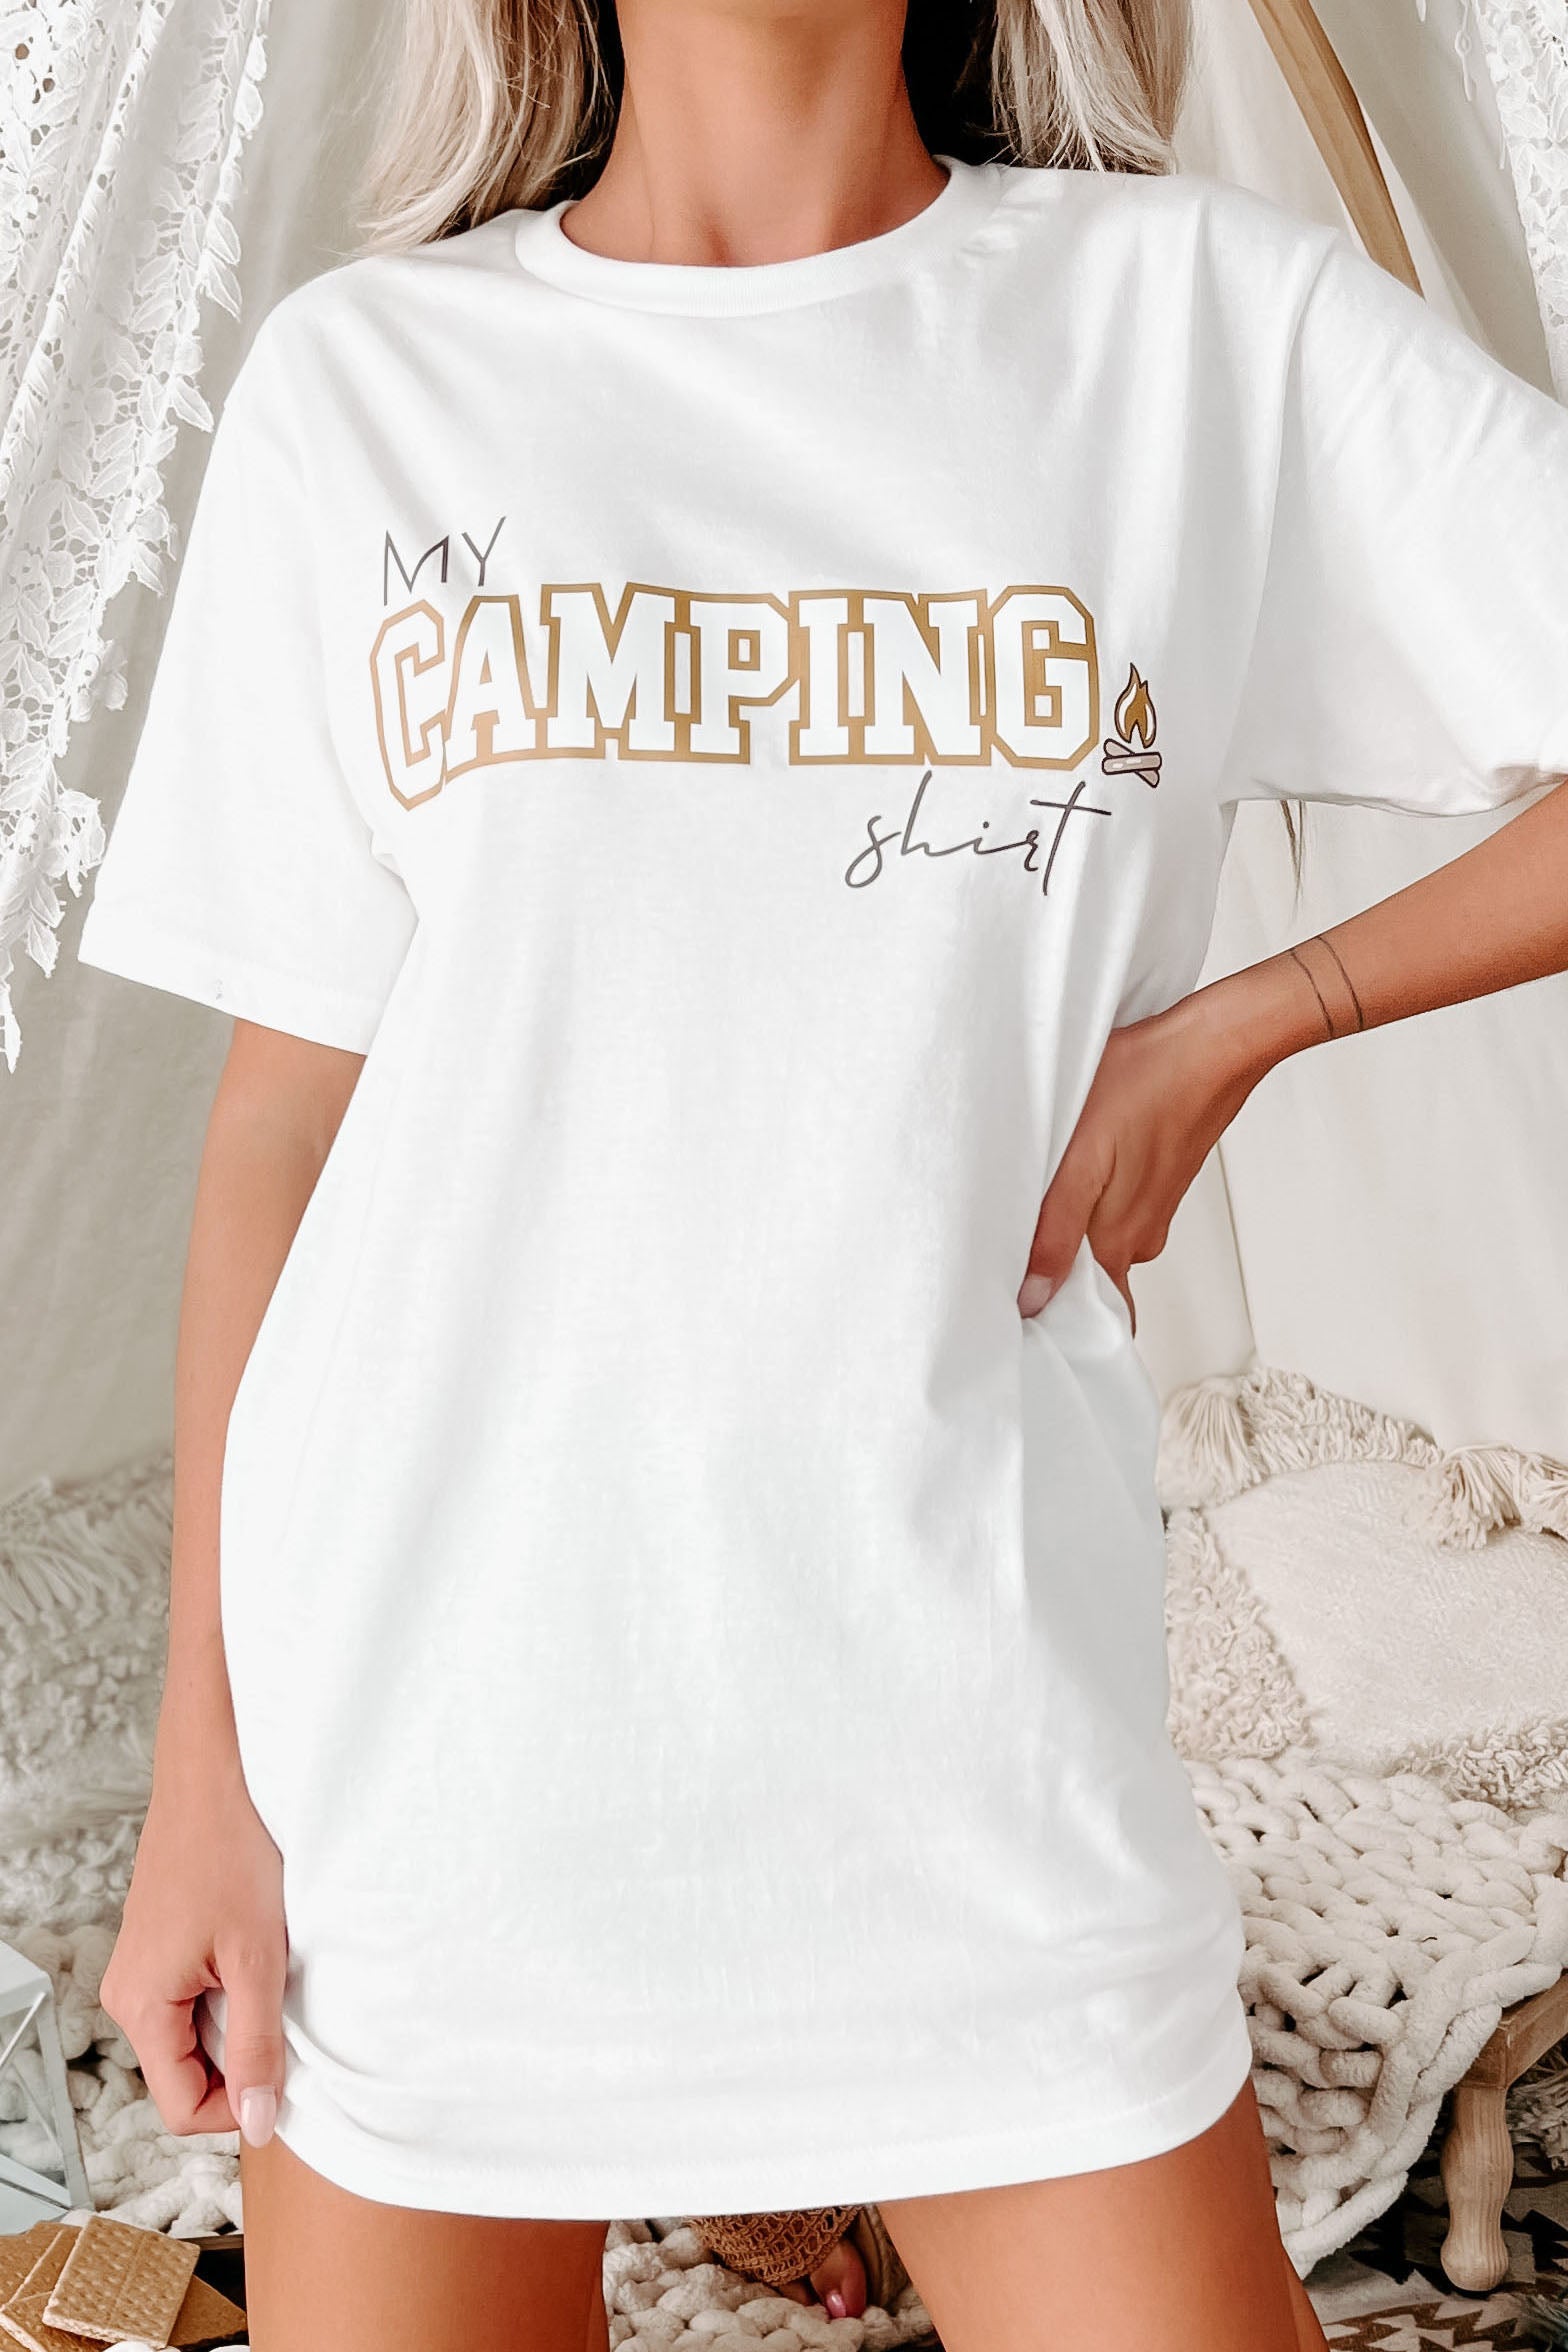 "My Camping Shirt" Metallic Graphic - Multiple Shirt Options (White) - Print On Demand